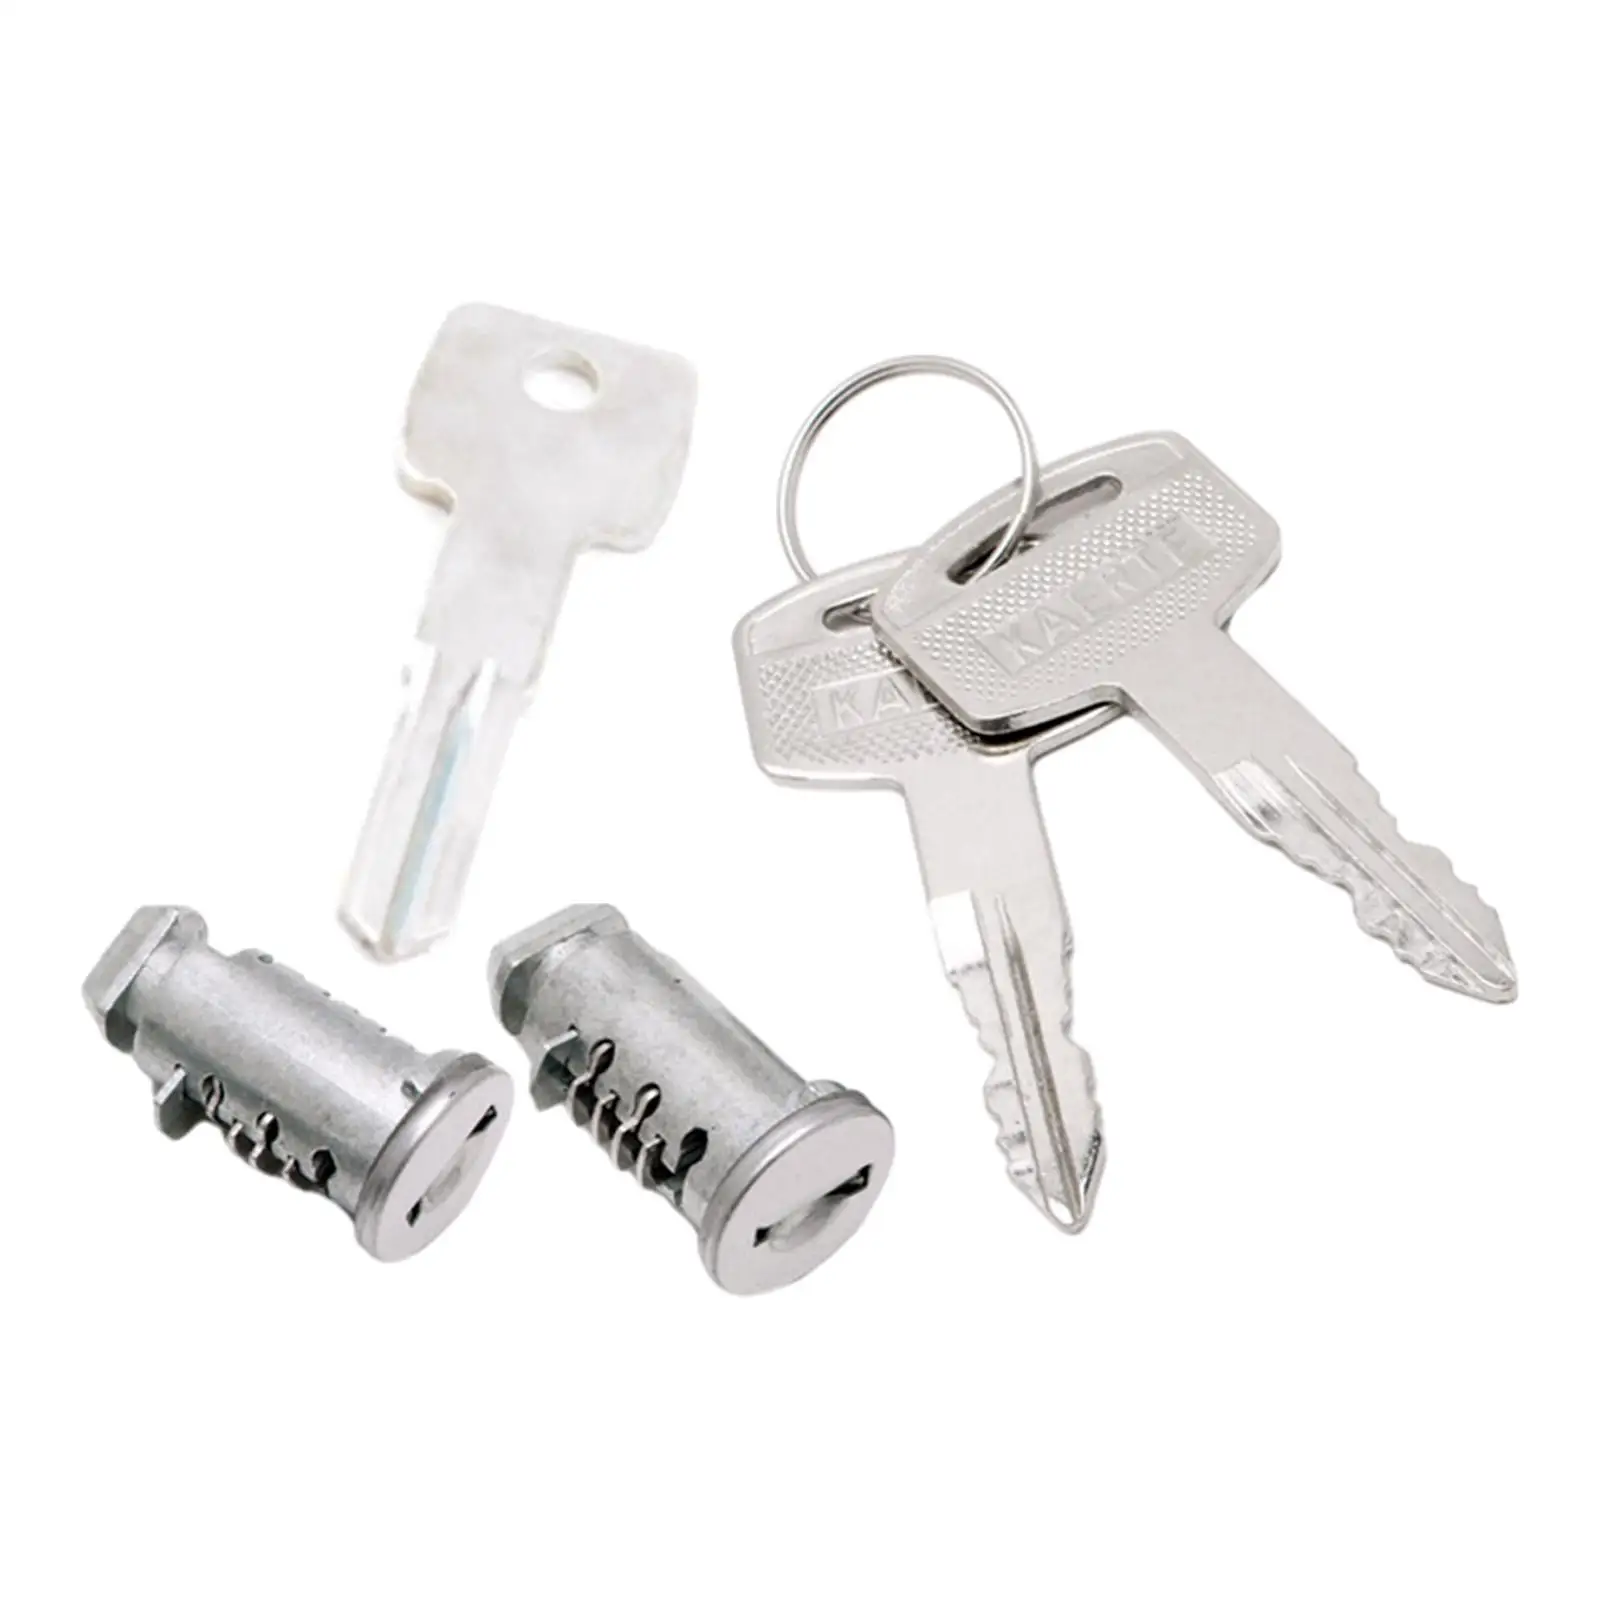 2Pcs Lock Cylindes Crossbar Locks Accessory Locks Keys, Premium, Lock Core Cross Bars Locks and Key Kit for Car Rack Locks